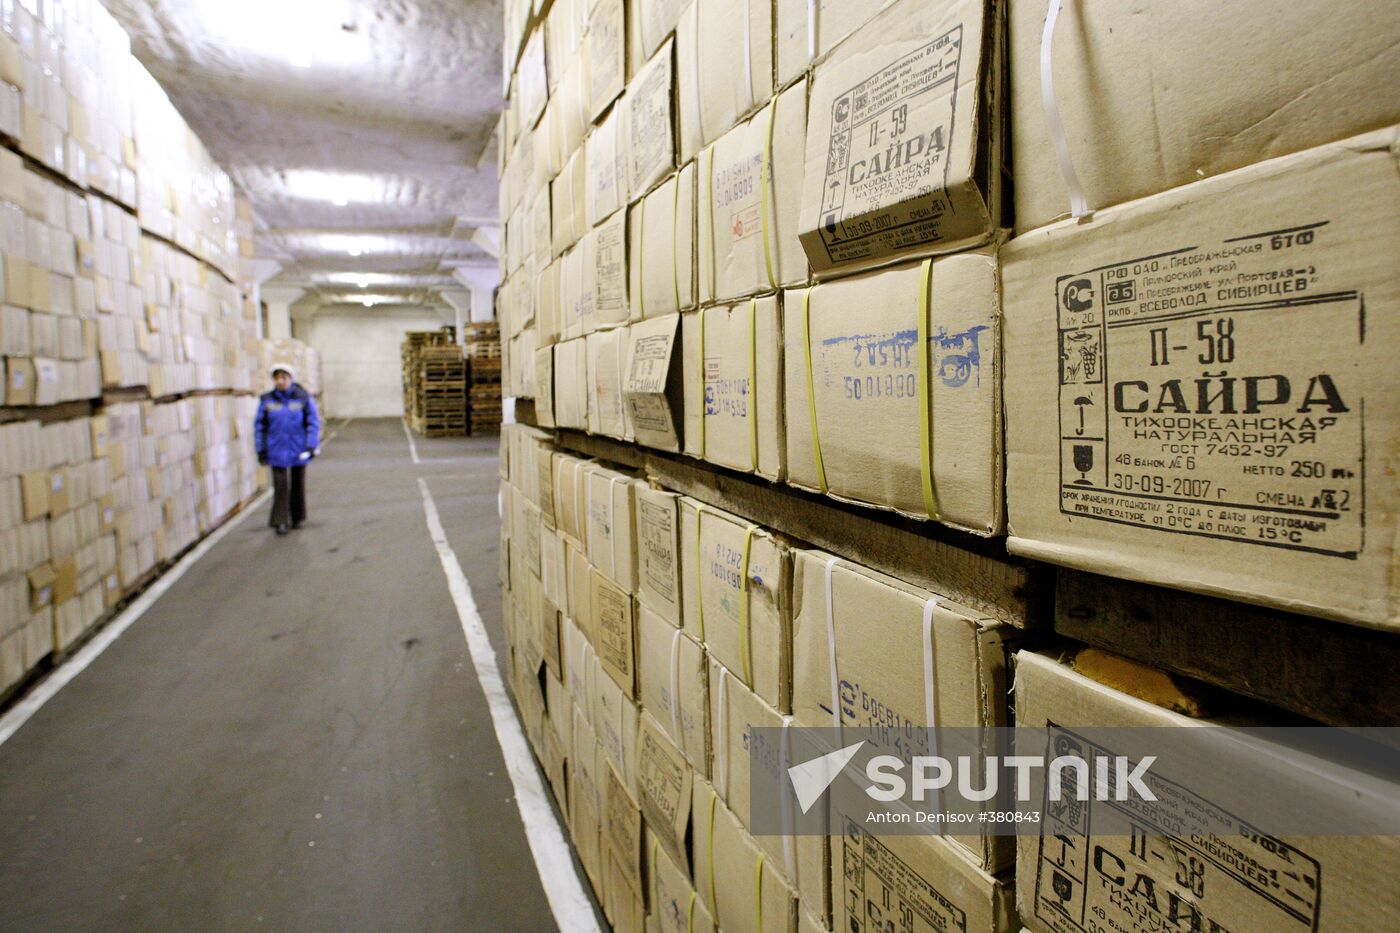 Shipment of humanitarian aid to Tajikistan